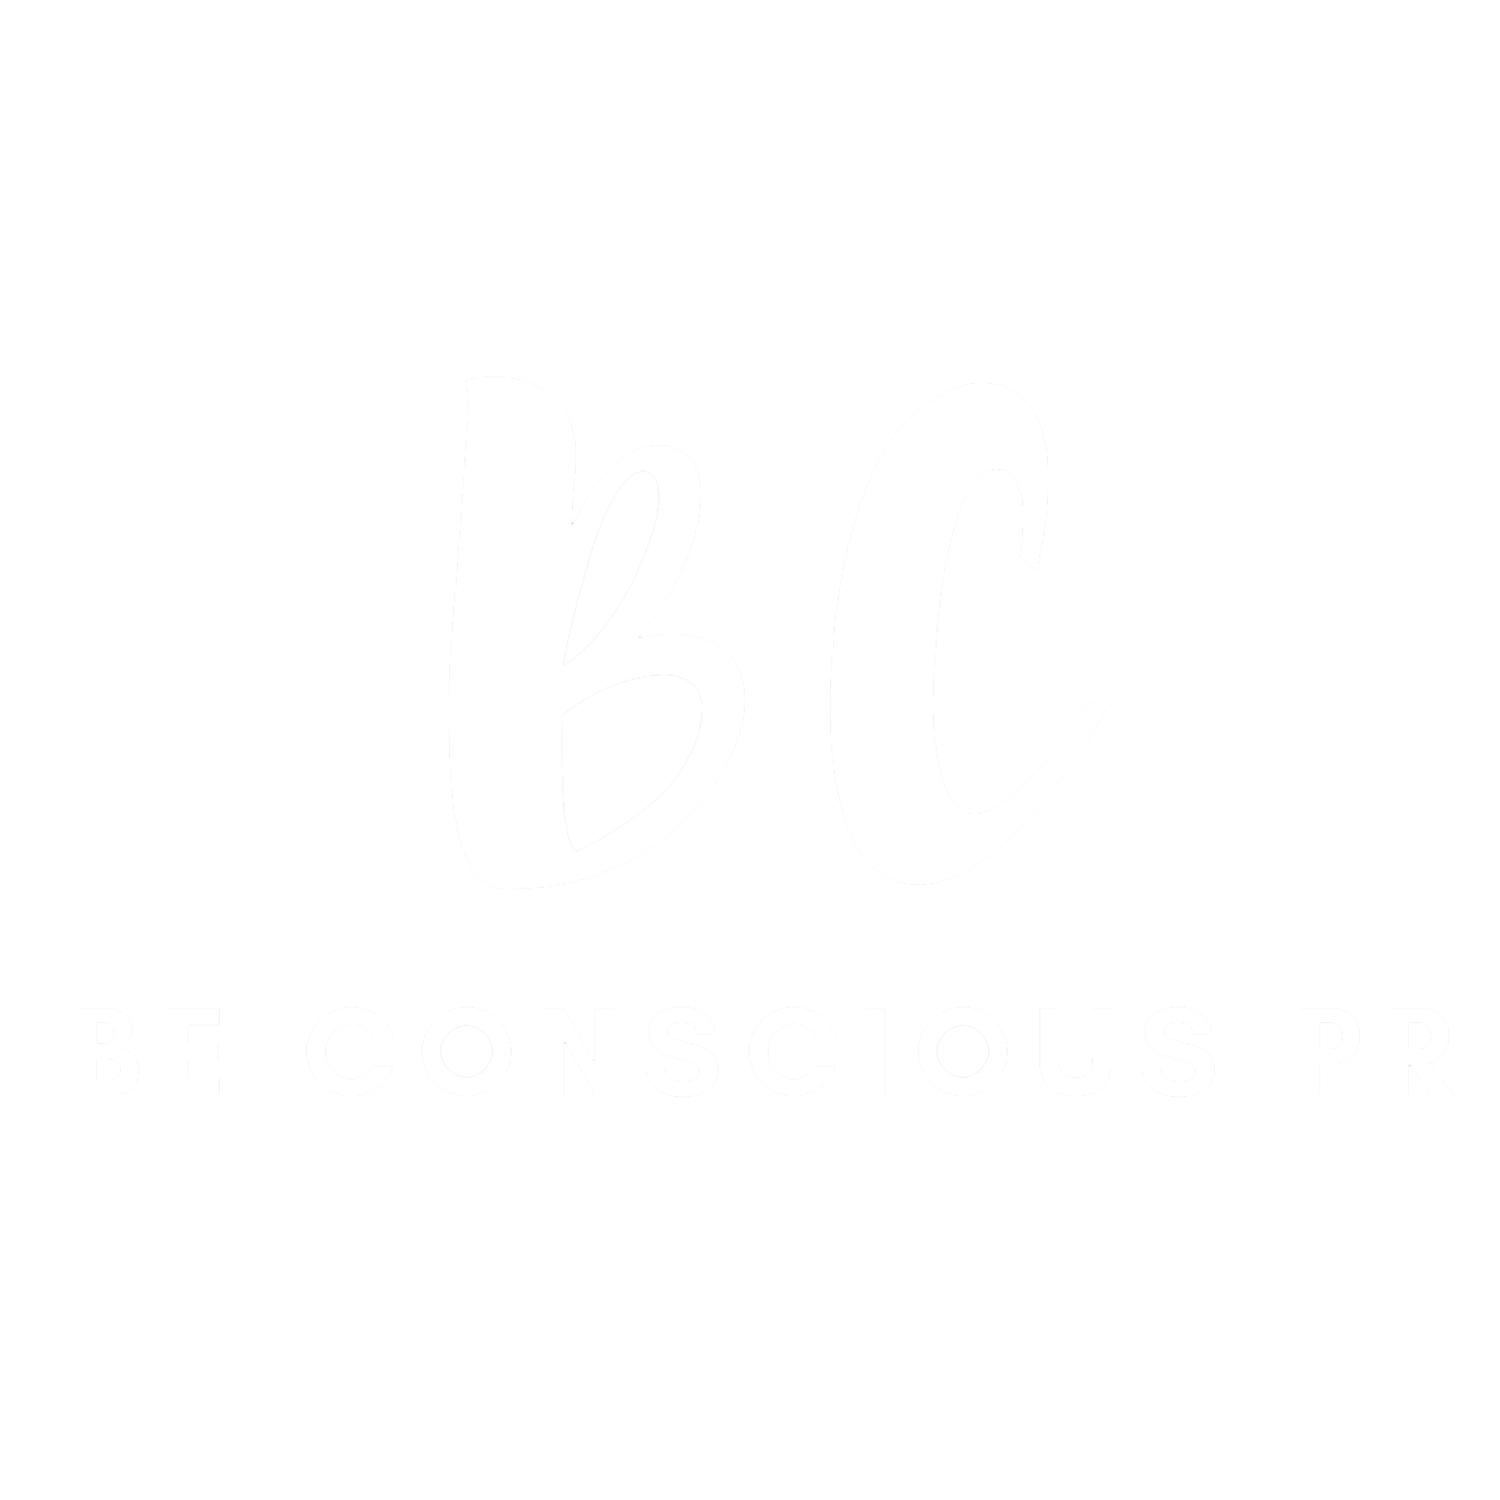 Be Conscious PR